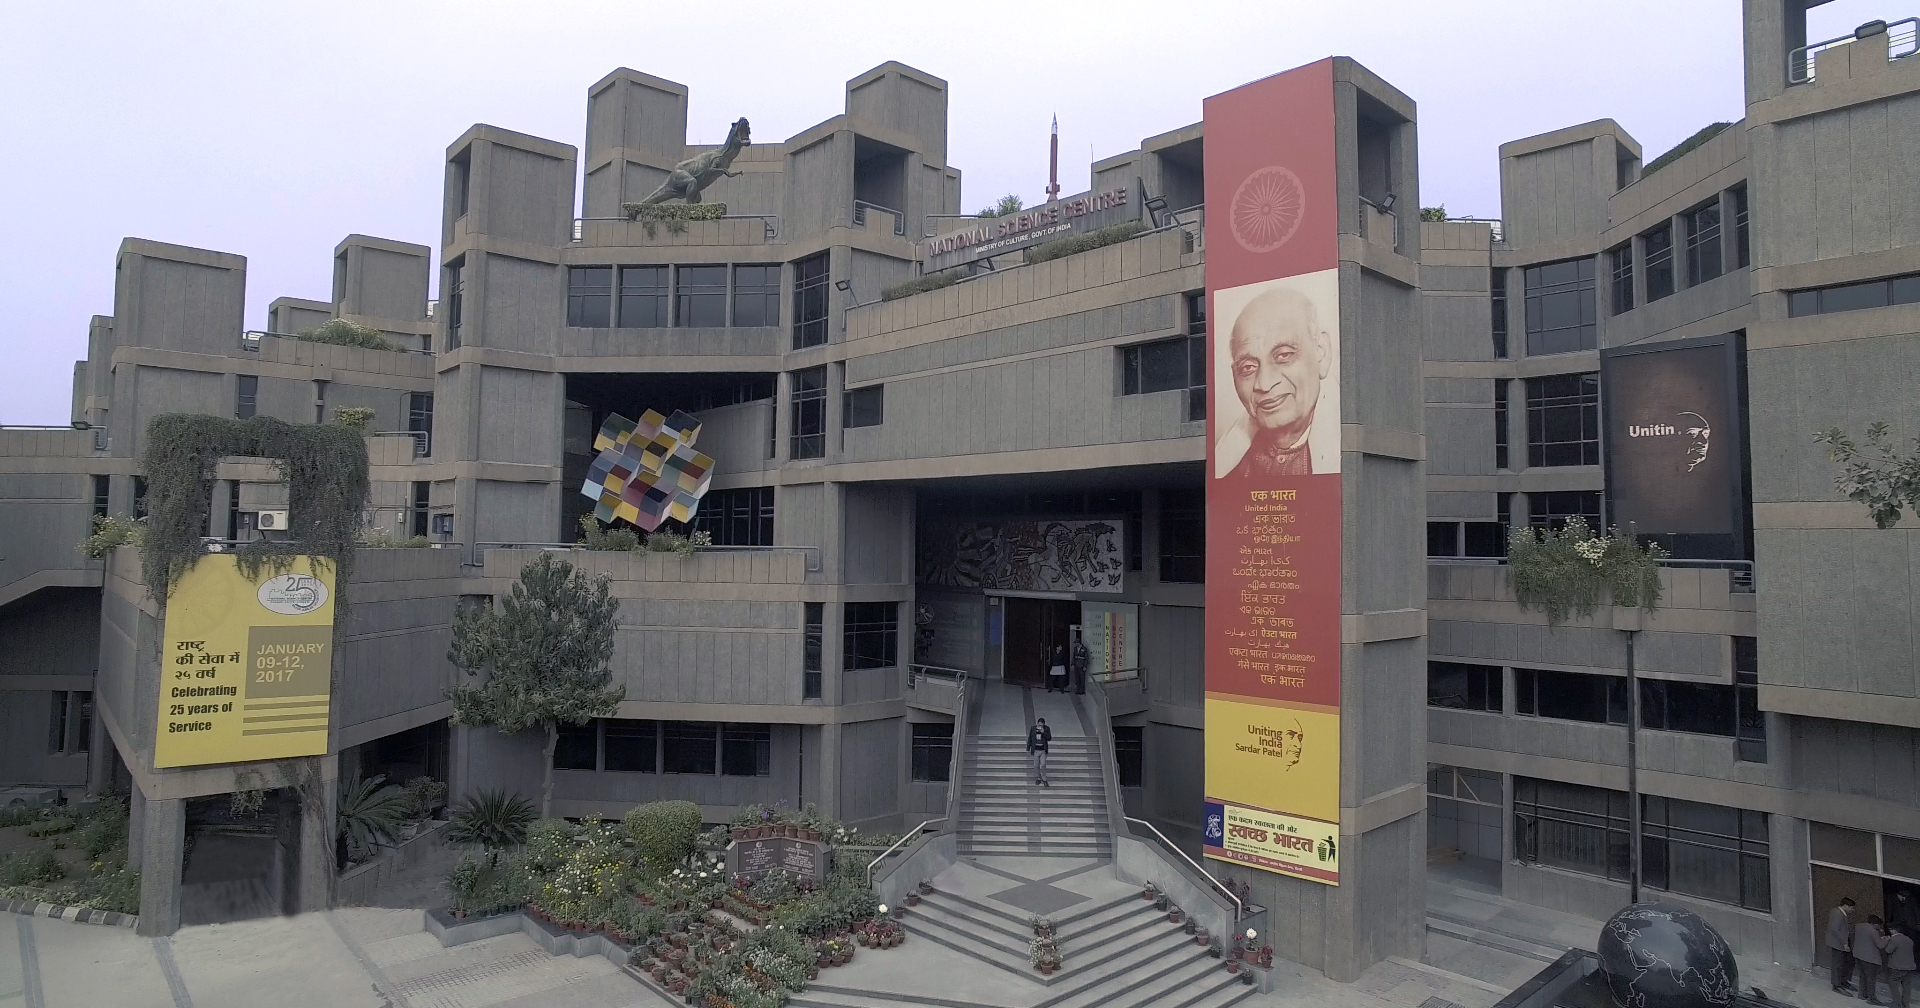 National Science Centre, Delhi